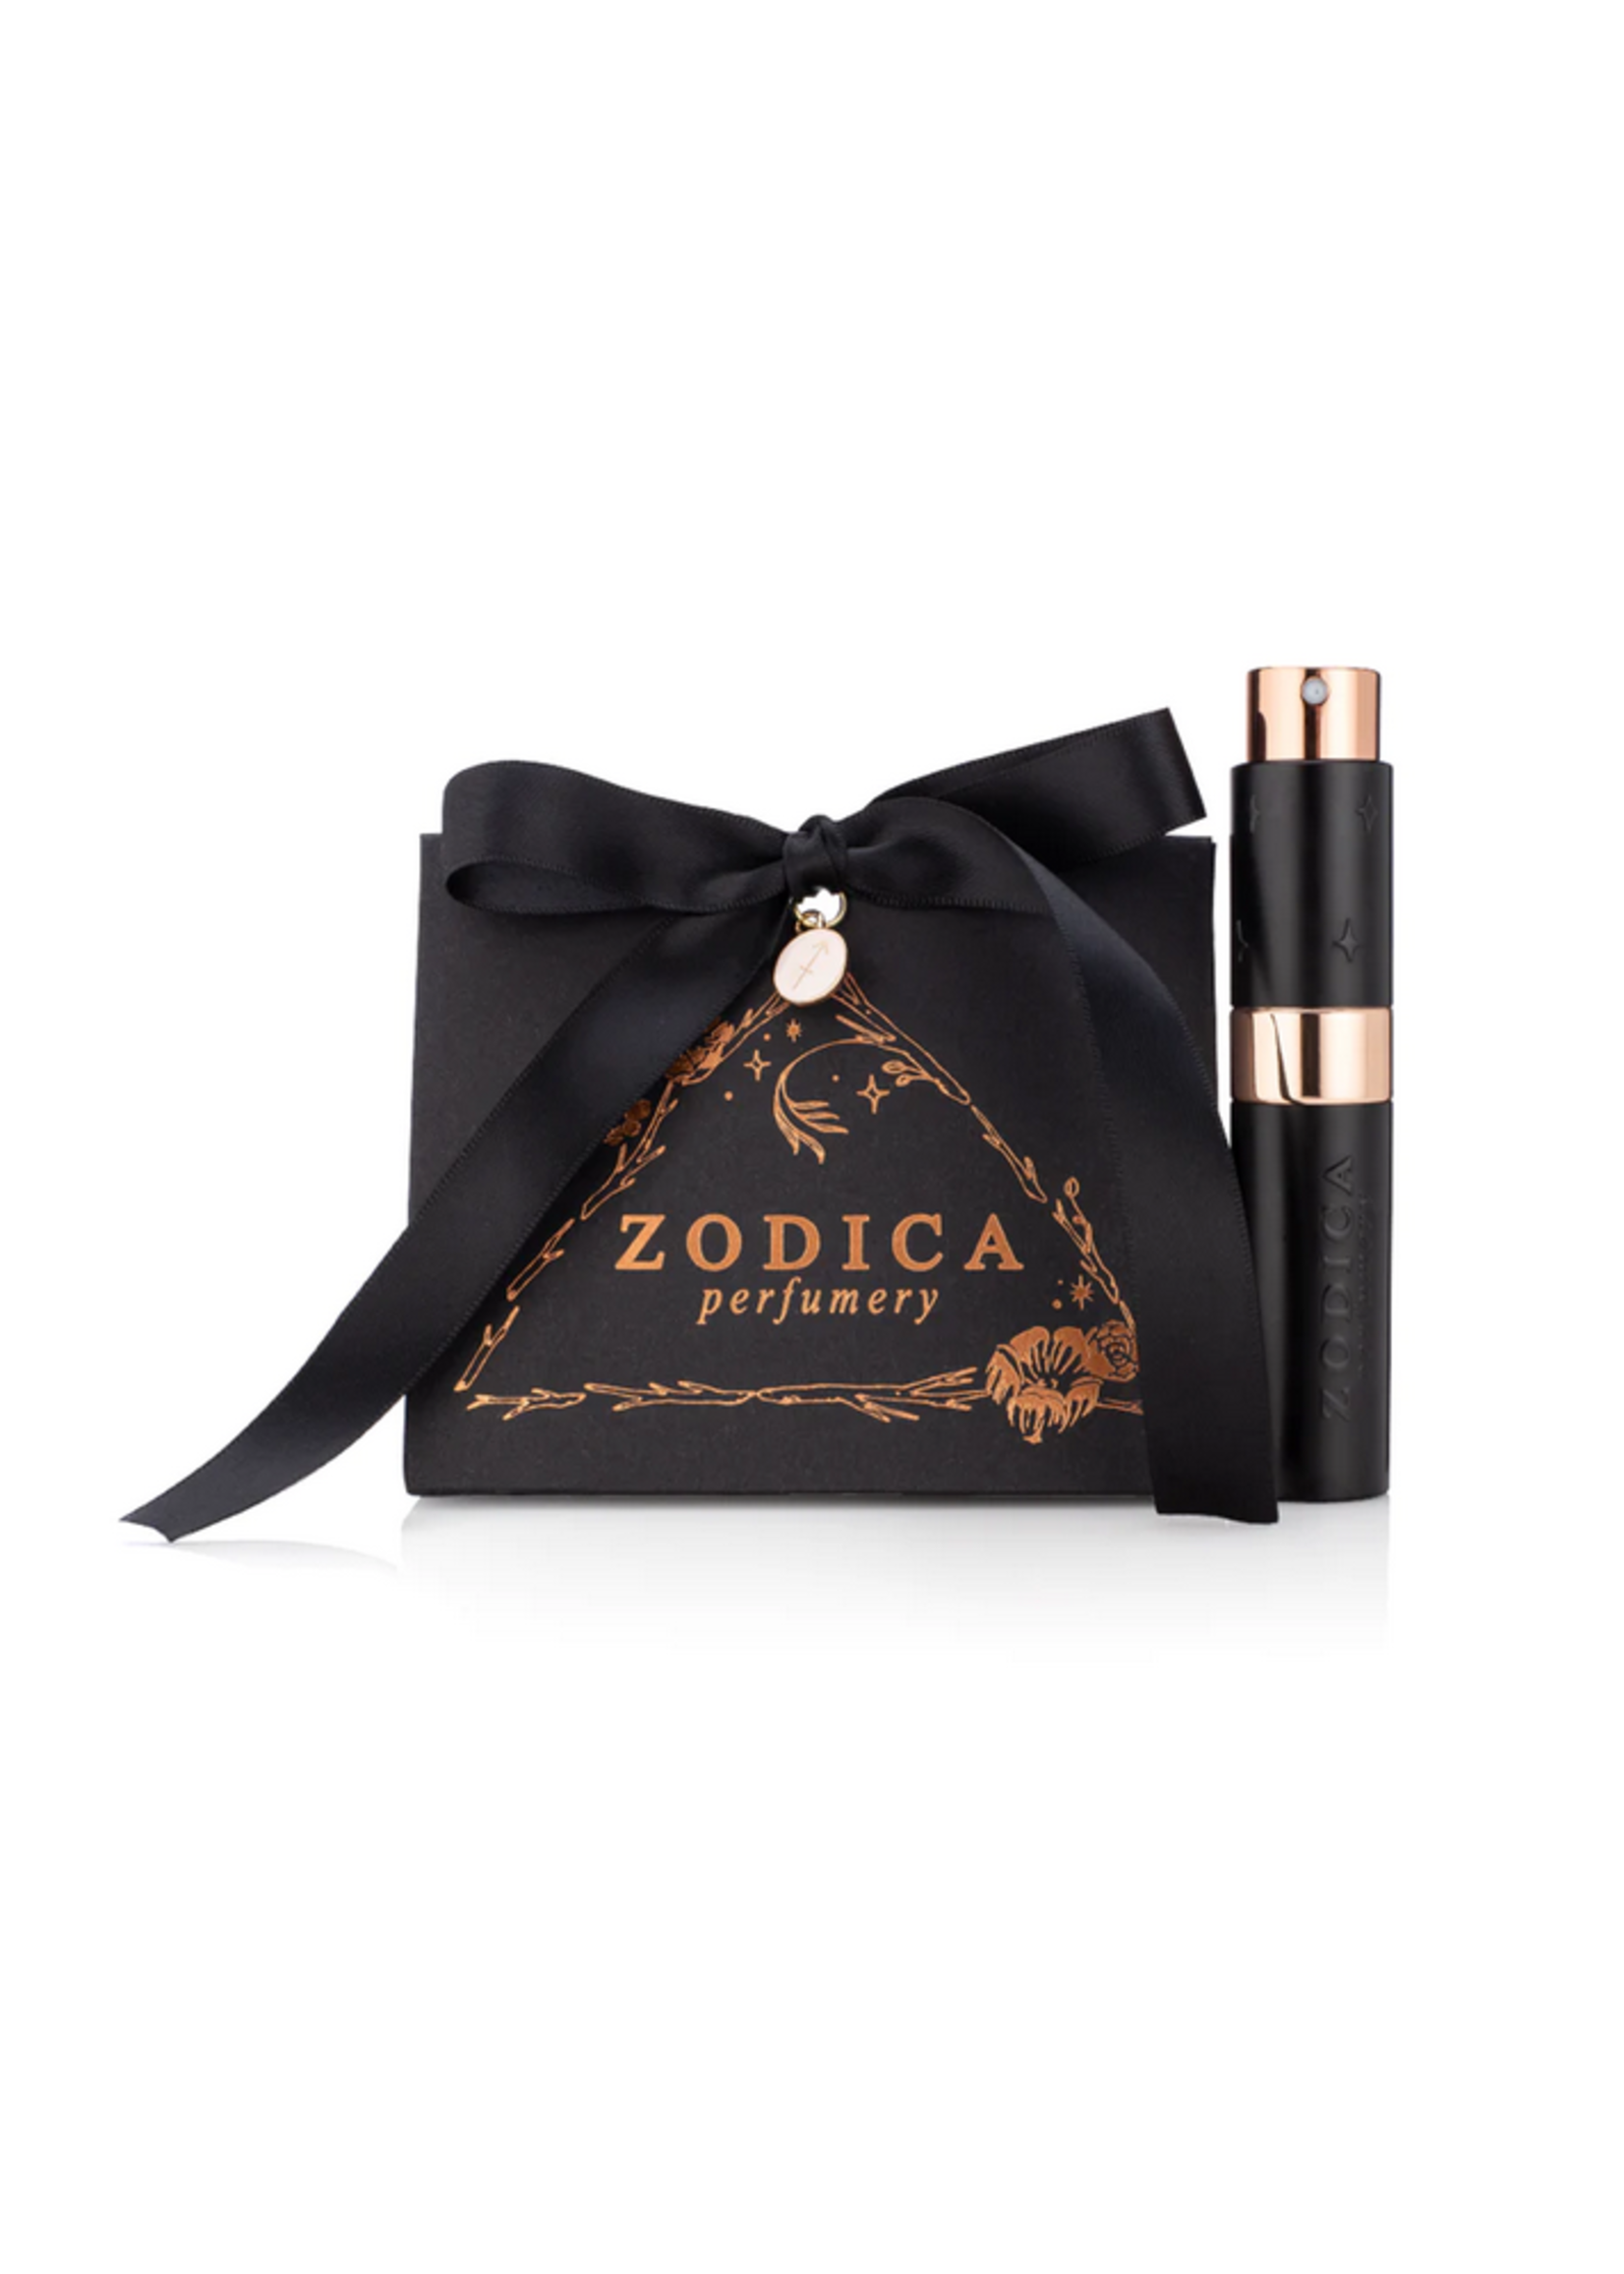 Zodica Perfume Twist & Spritz Travel Spray Gift